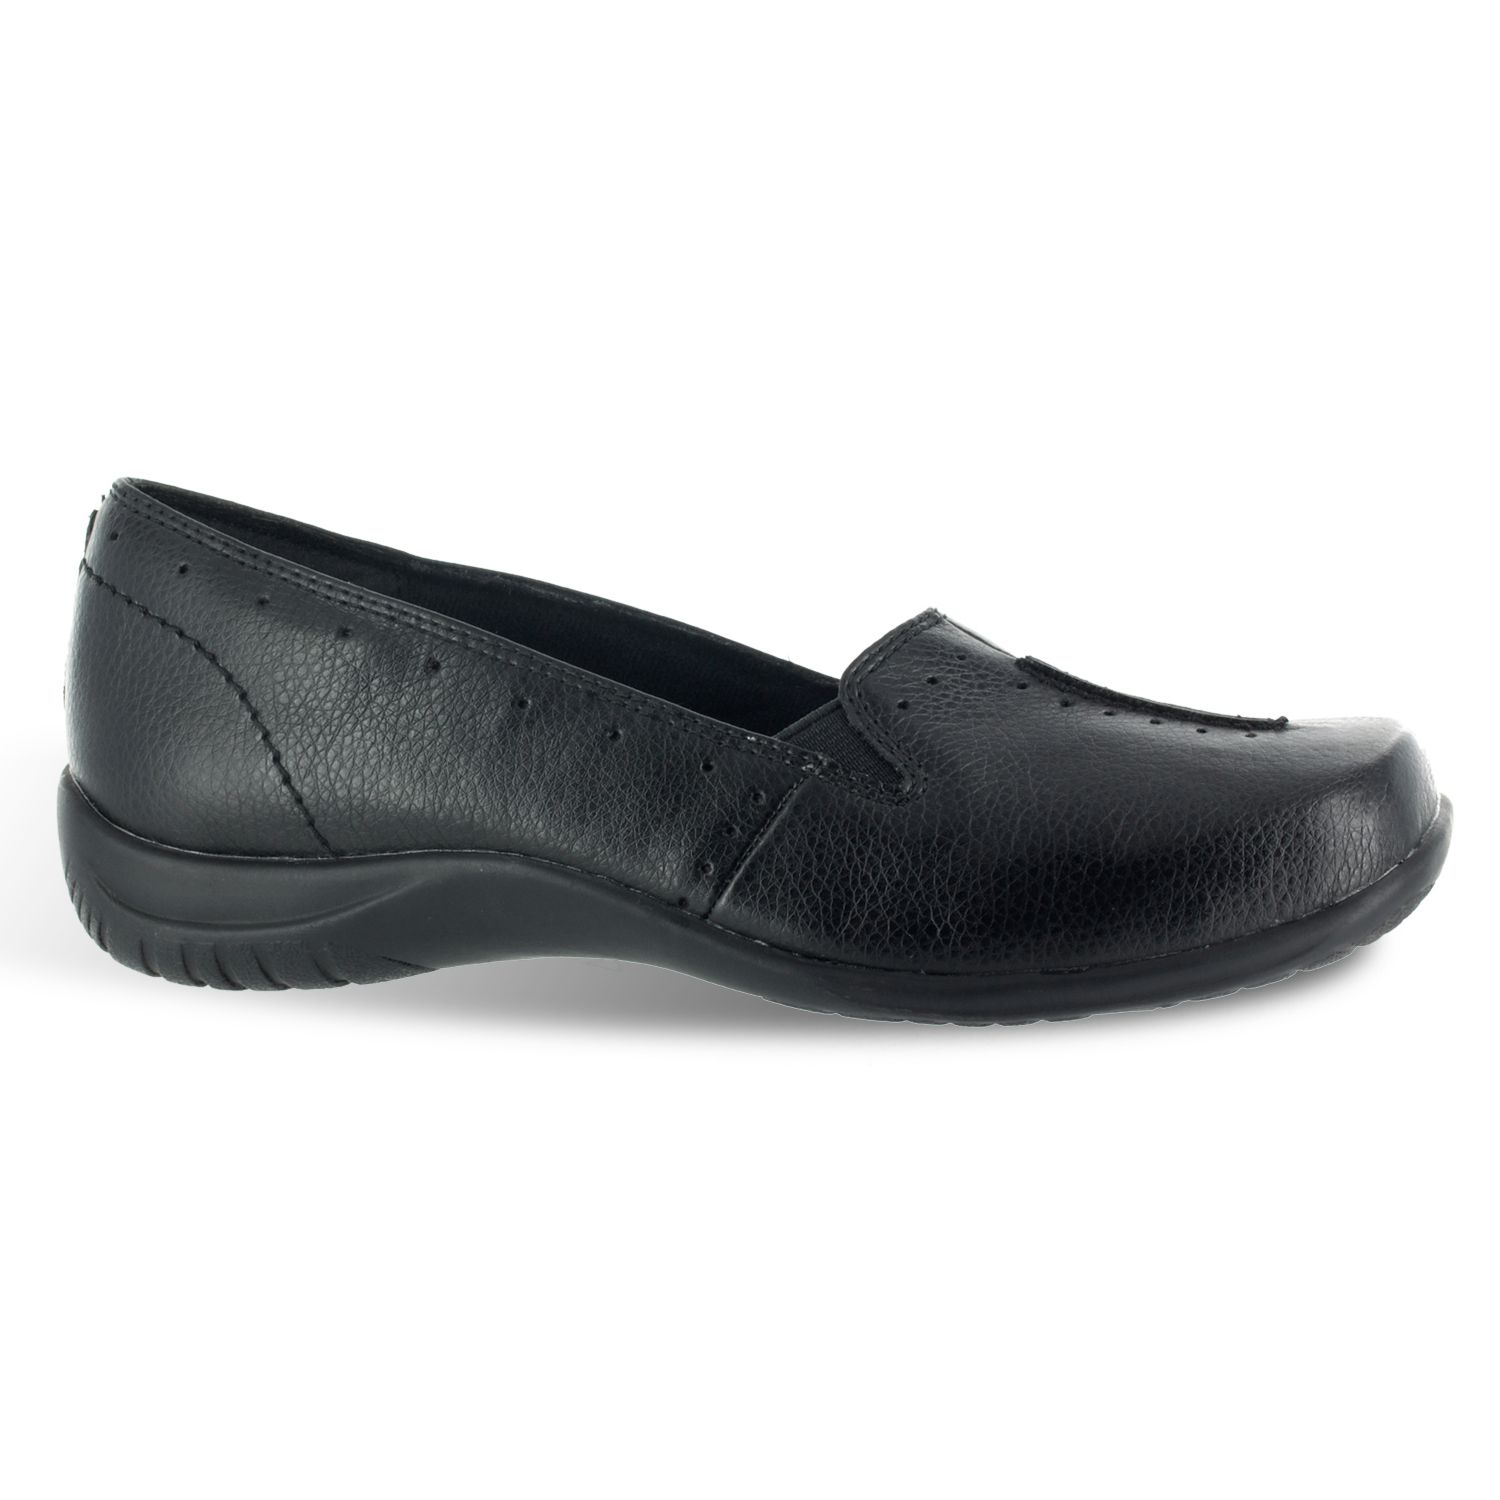 Image for Easy Street Purpose Women's Slip-On Shoes at Kohl's.